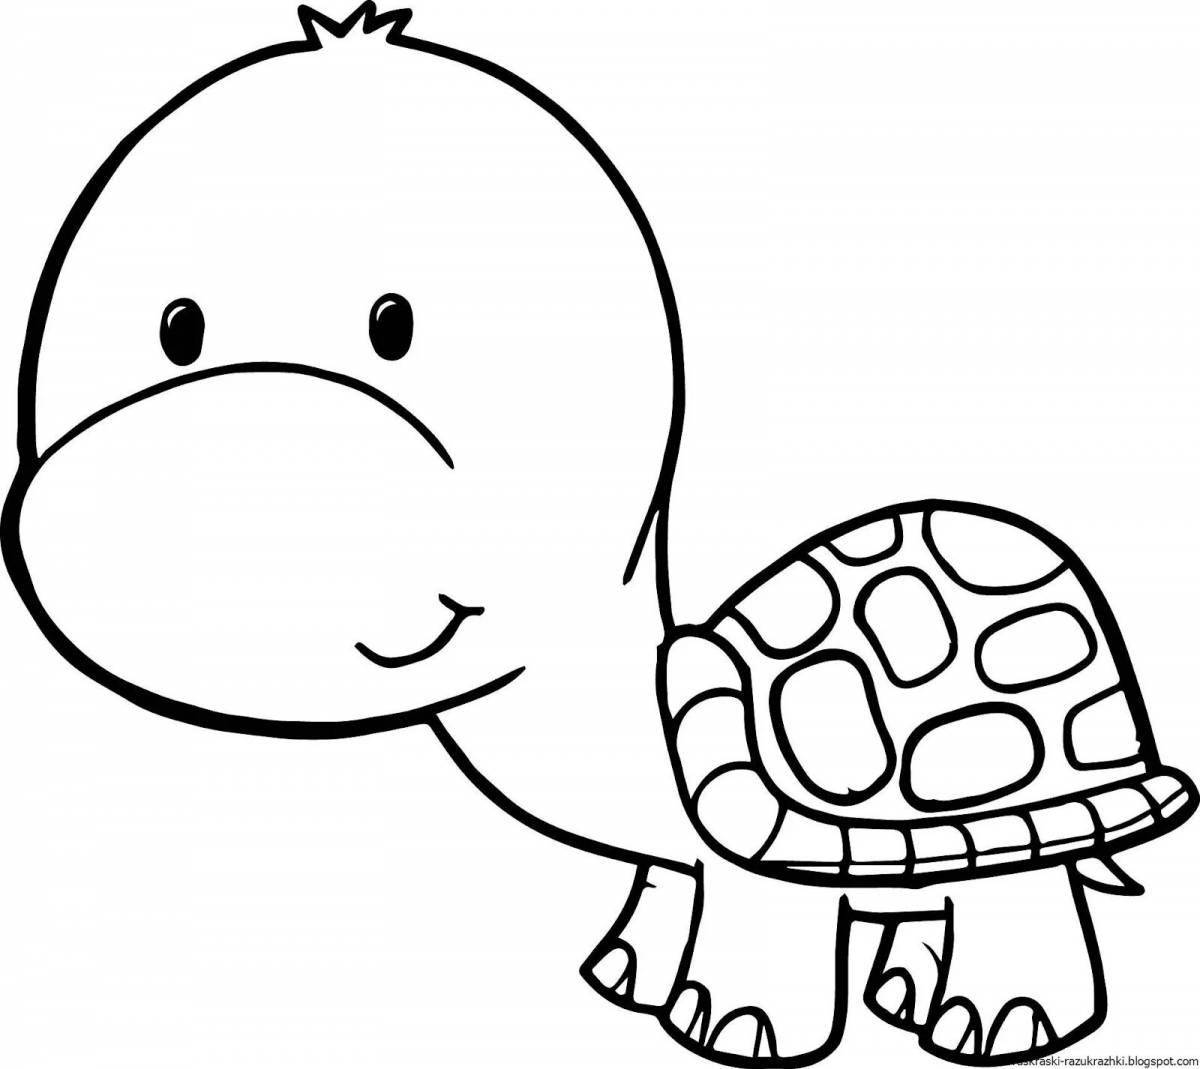 Coloring cute turtle